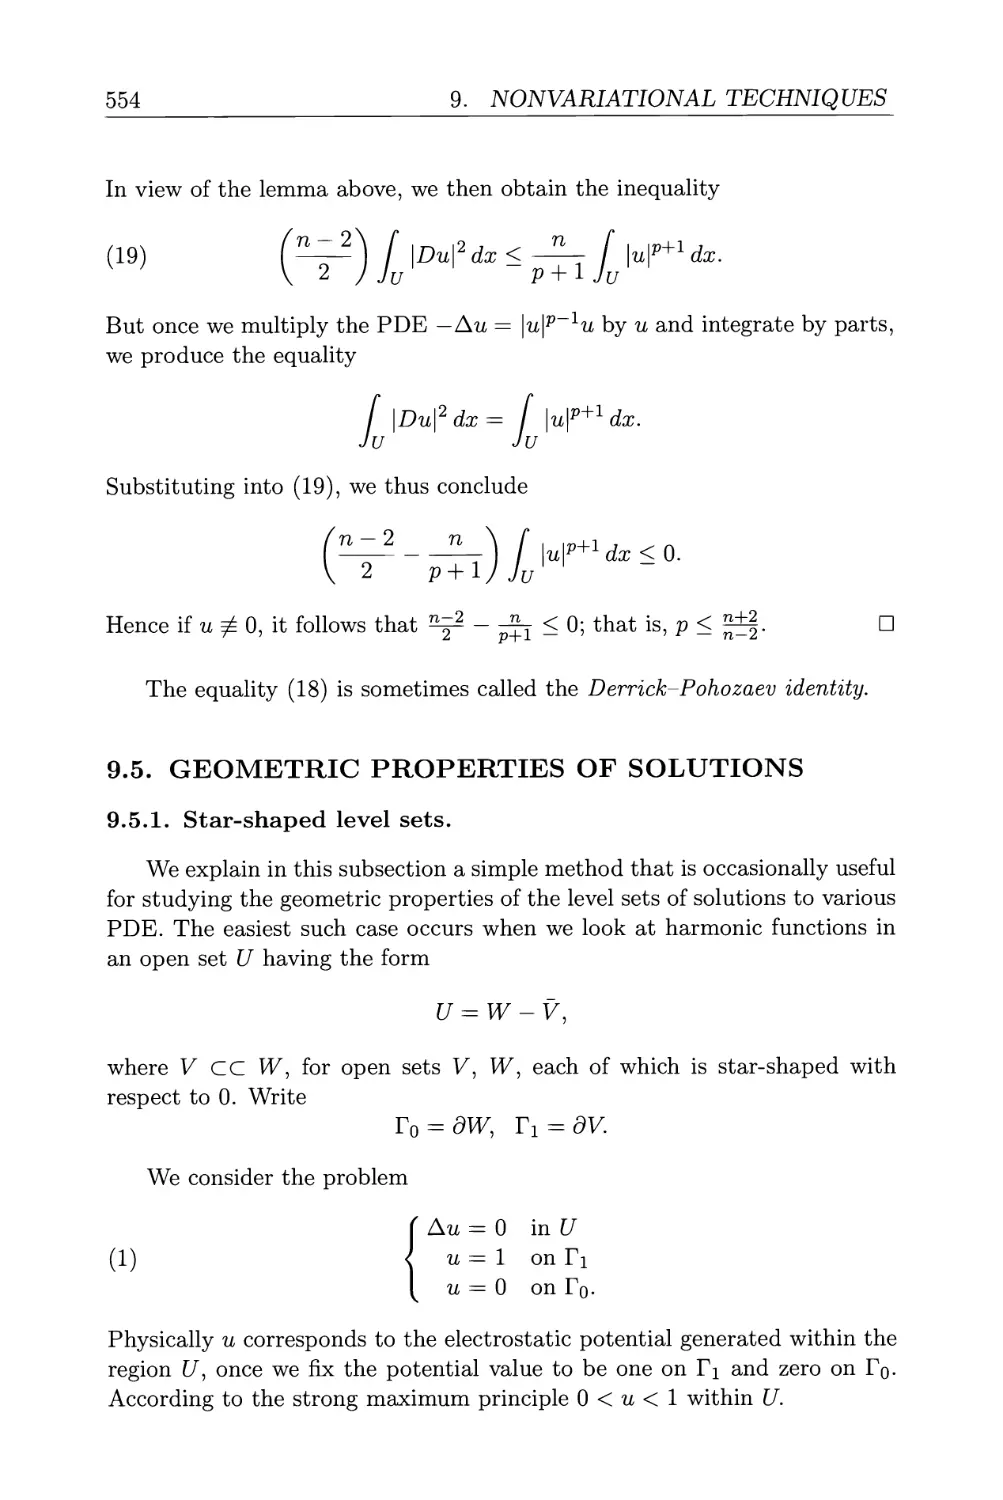 9.5. Geometric properties of solutions